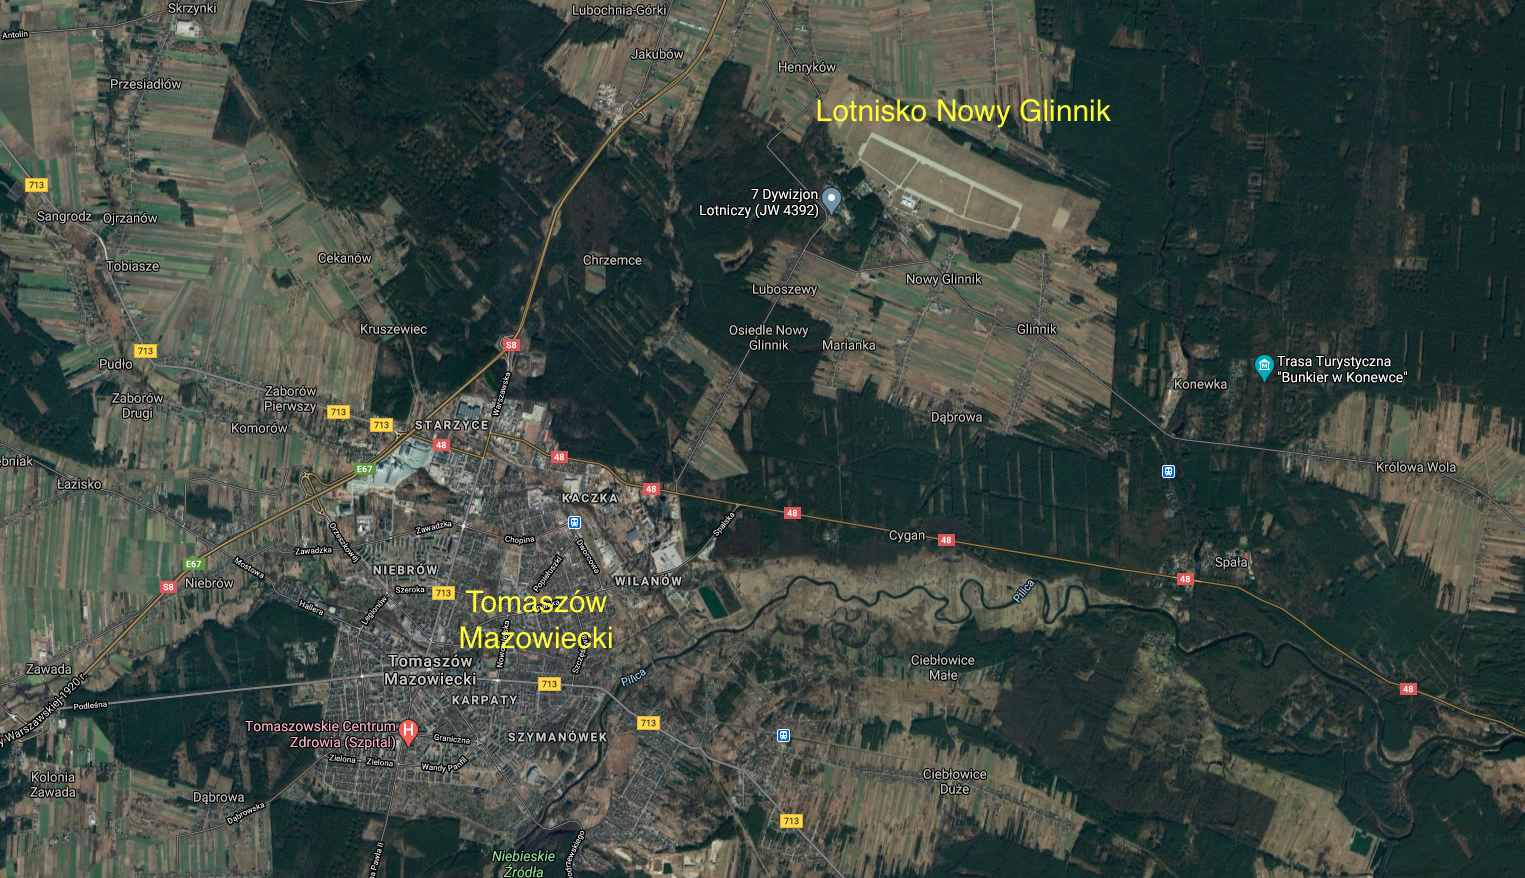 Tomaszów Mazowiecki airport. 2012 year. Satellite image